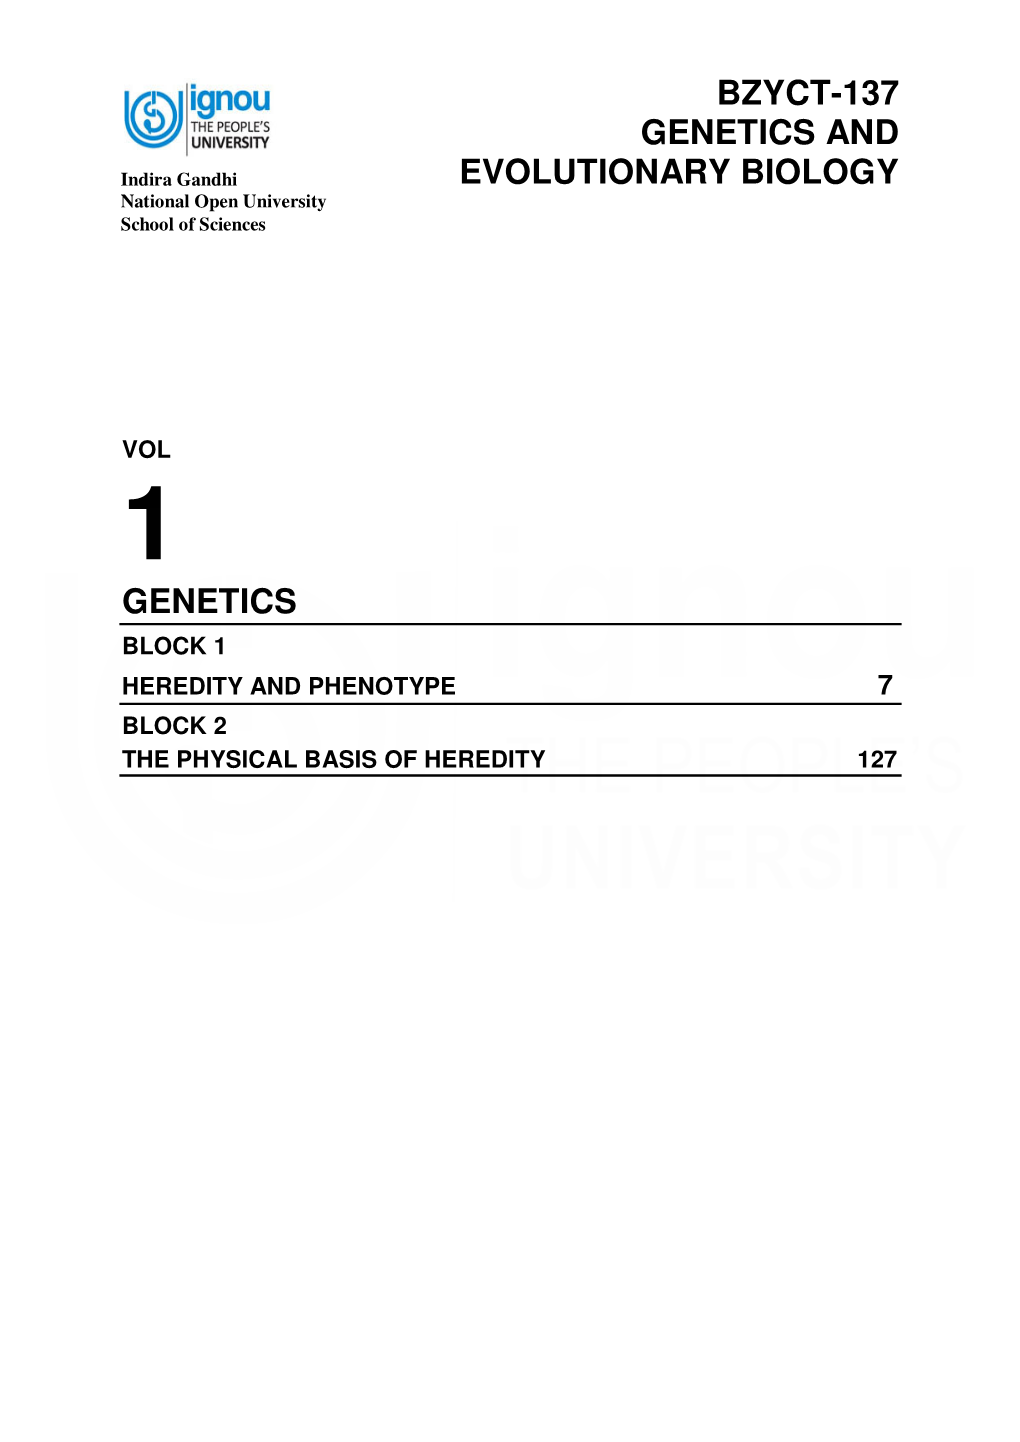 Bzyct-137 Genetics and Evolutionary Biology